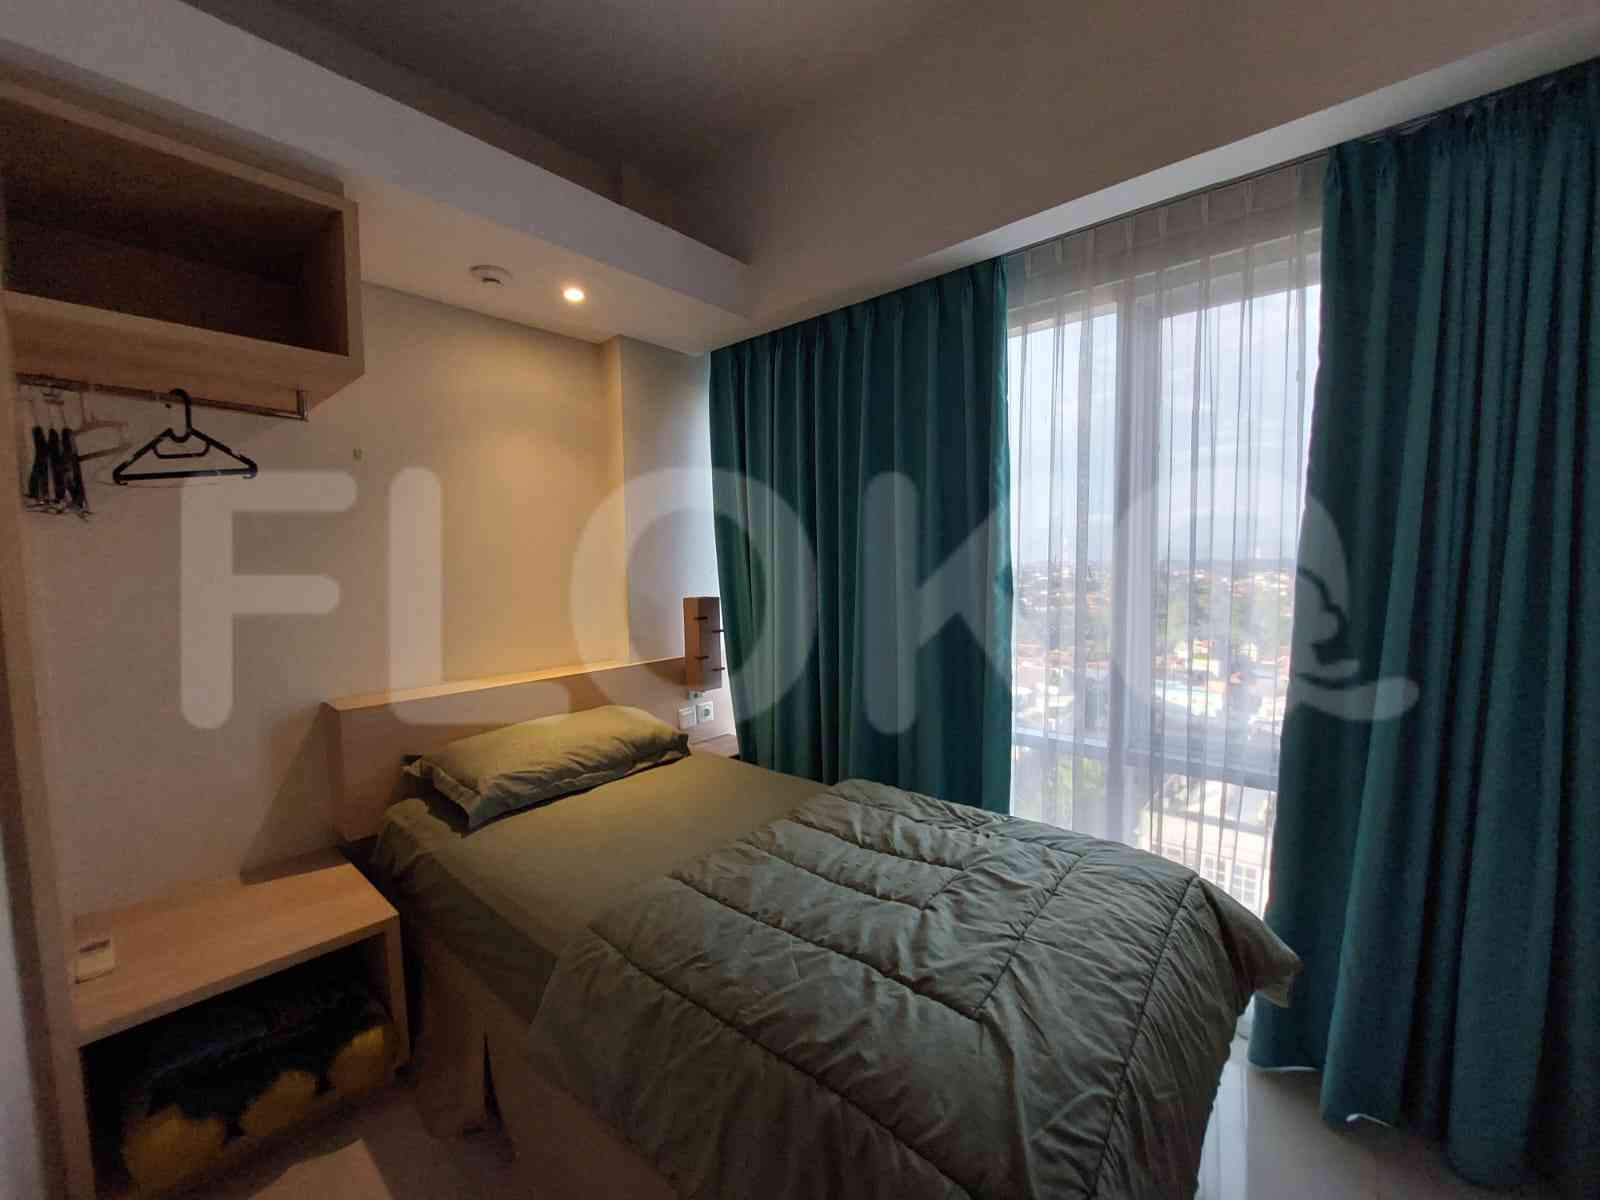 2 Bedroom on 9th Floor for Rent in Bogor Icon - fbo460 7